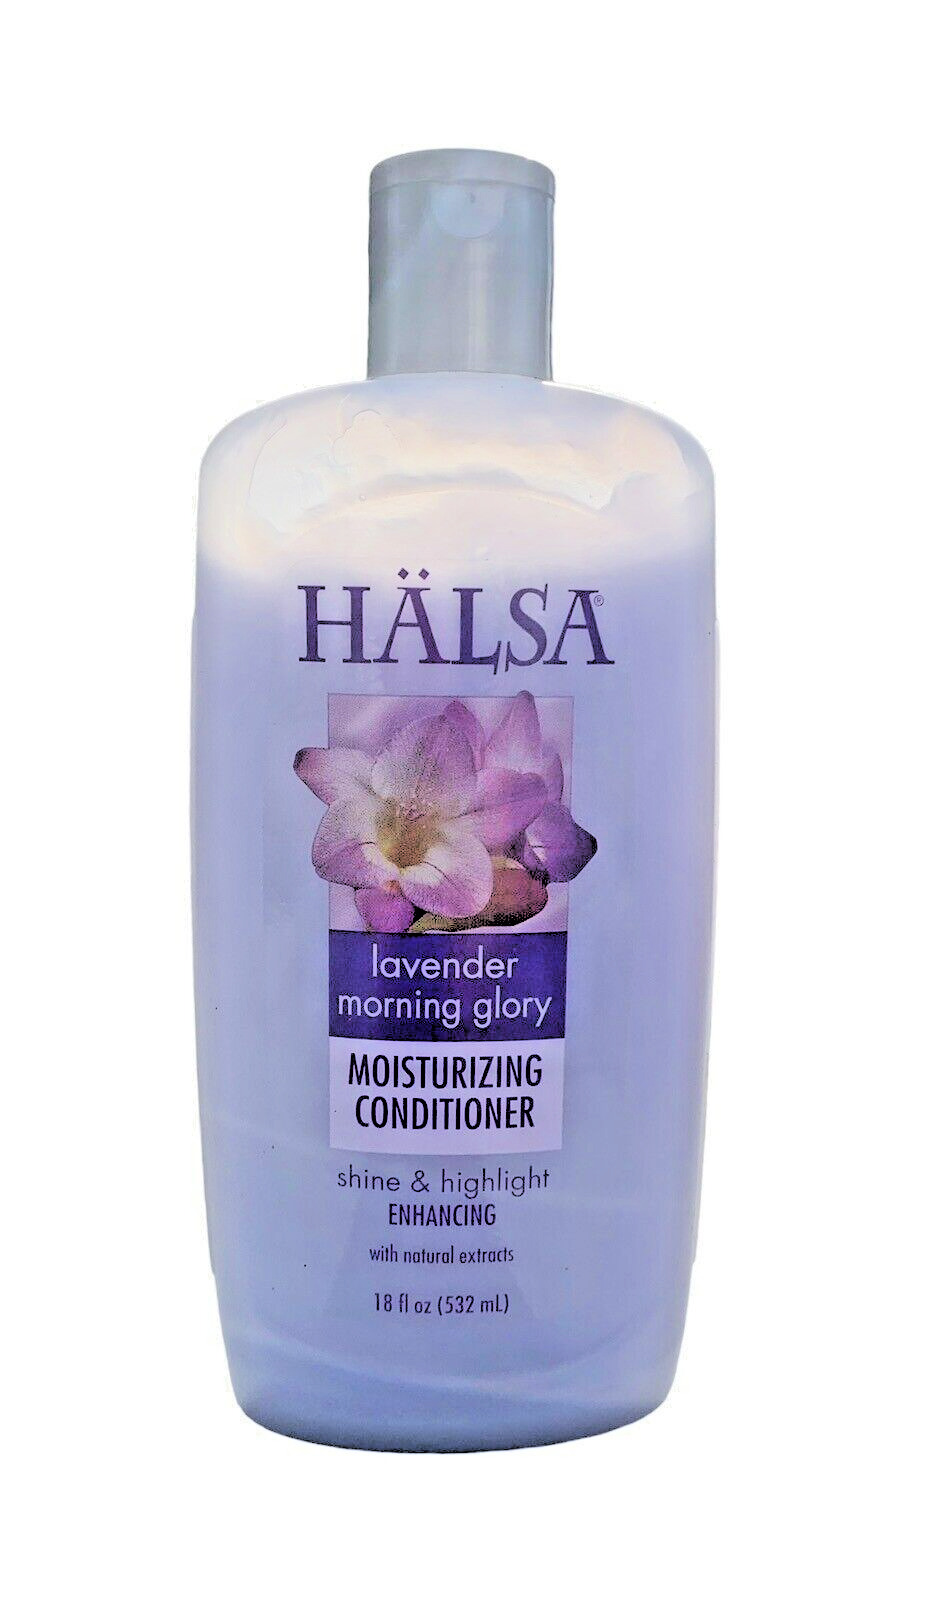 VTG HALSA lavender morning glory Hair Conditioner shine & highlight 18 oz. HTF